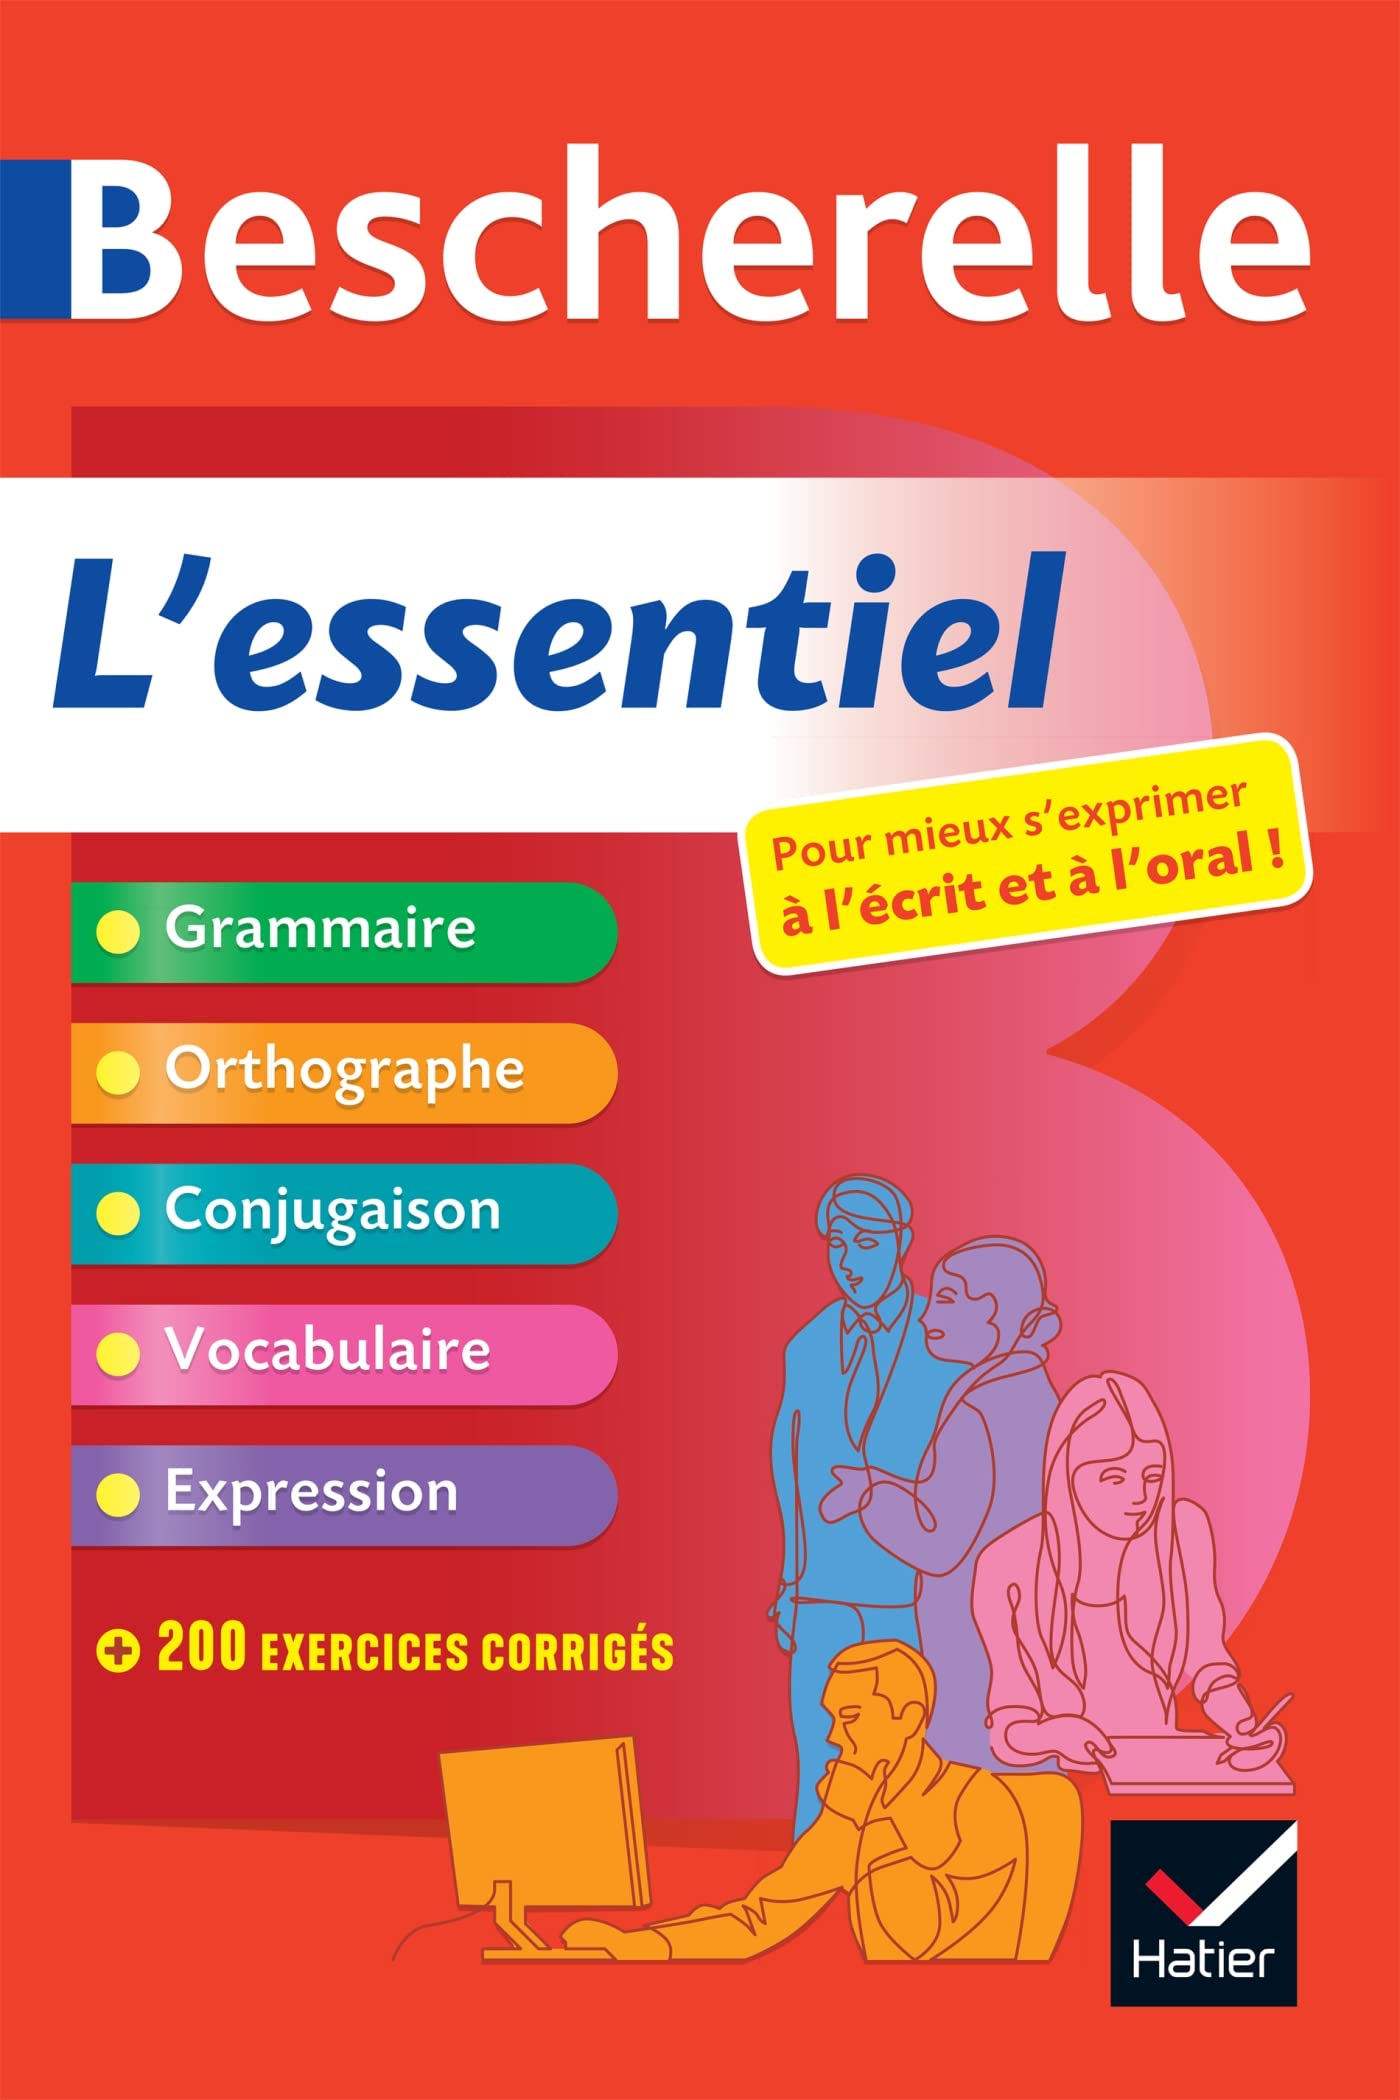 Bescherelle L'essentiel 让你的法语写作与口语更上一步